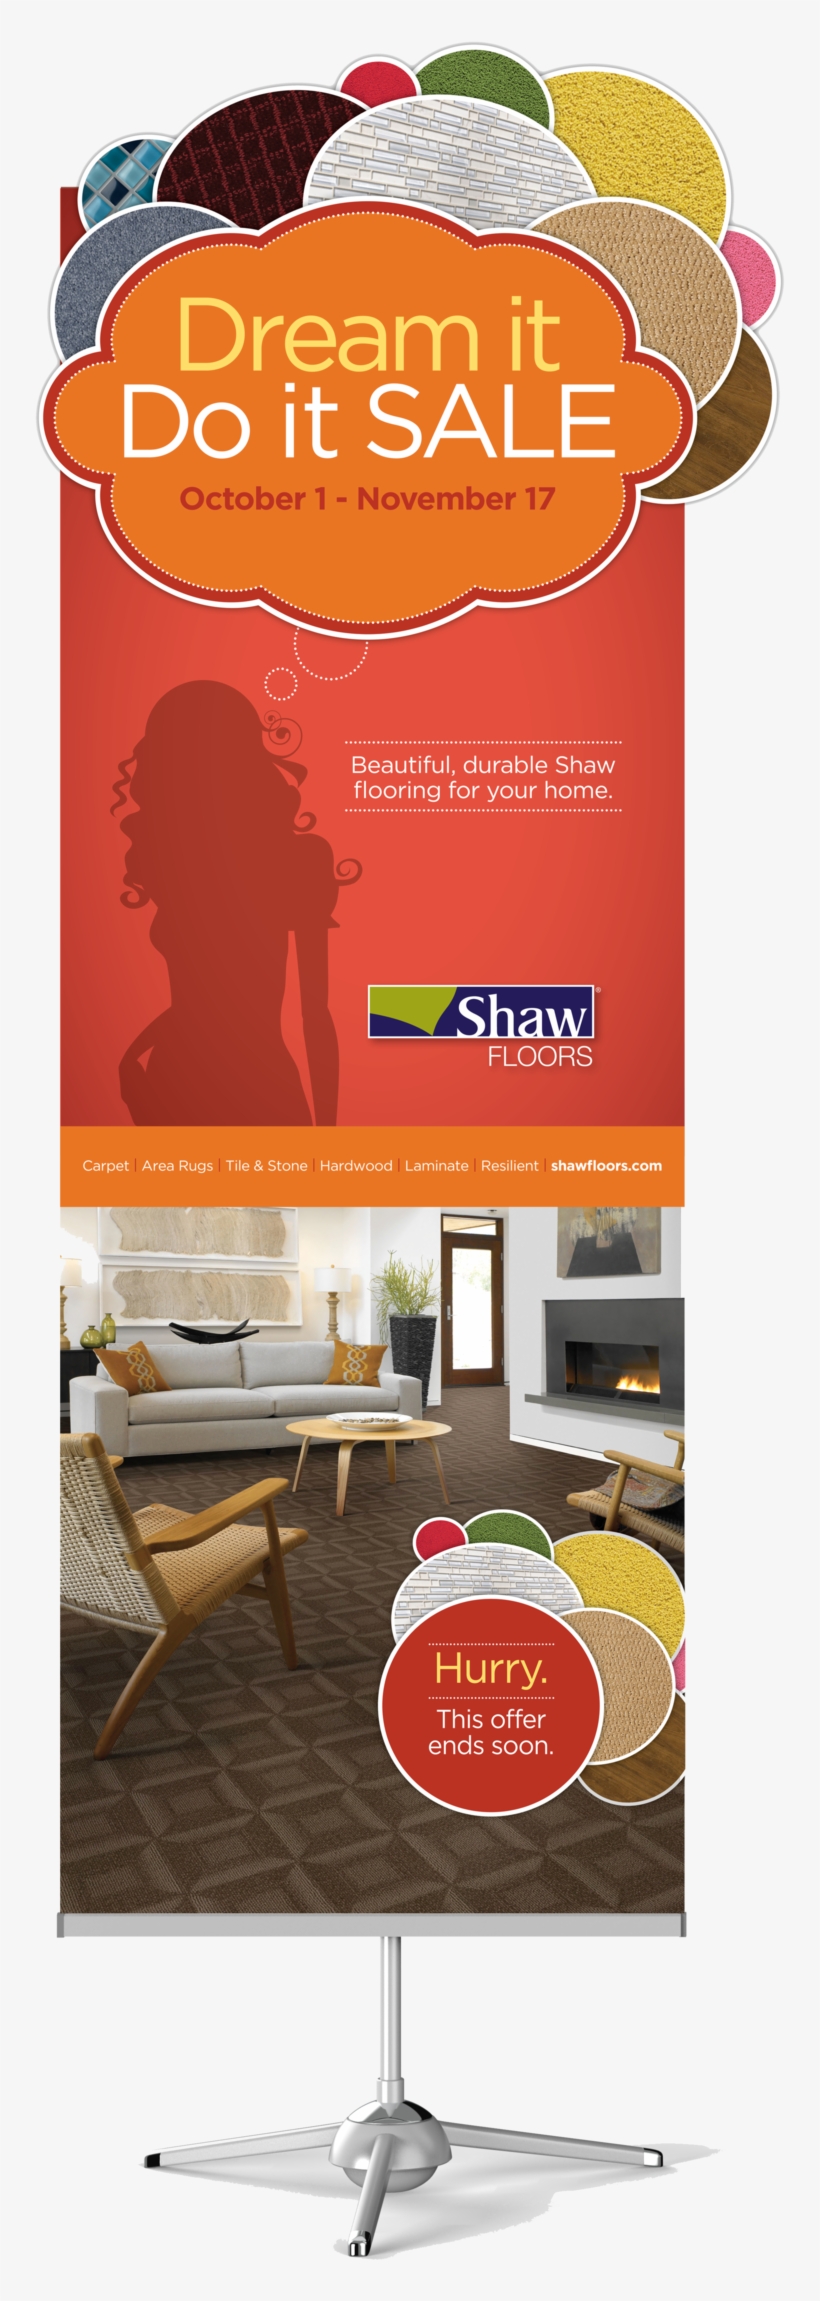 Shaw Floors Promotion, transparent png #4726754